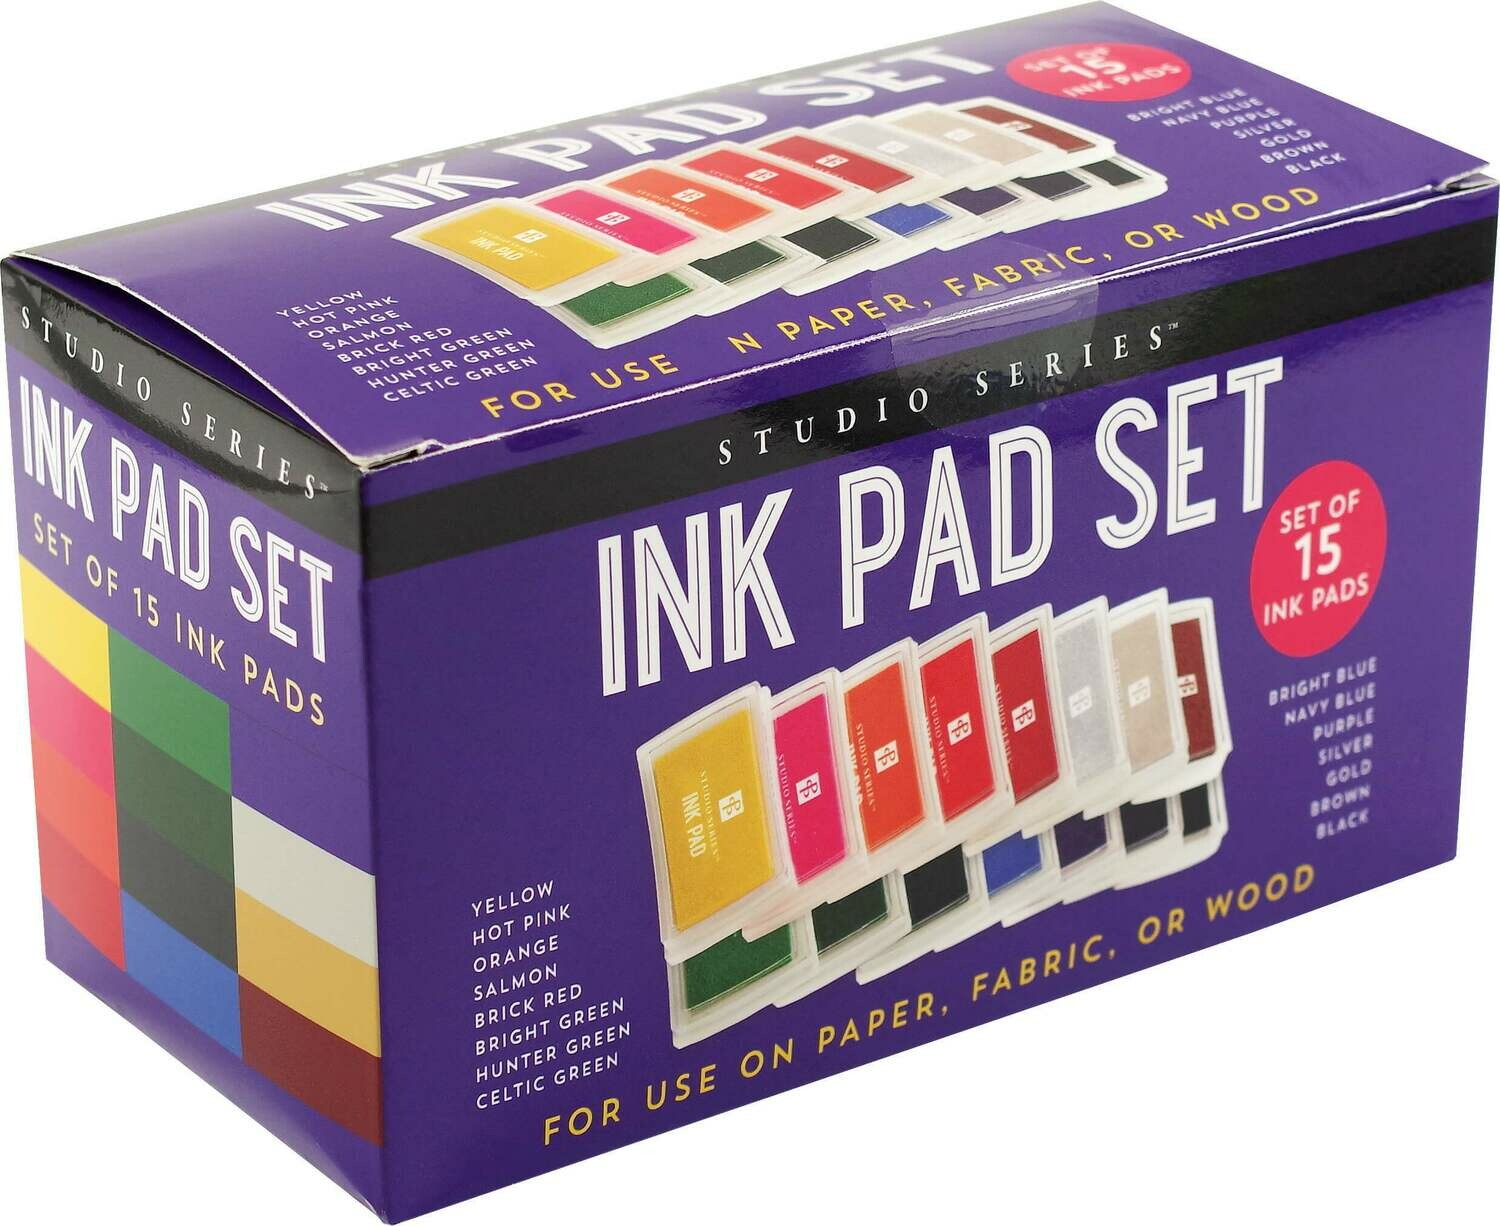 PPP Studio Series Ink Pad Set